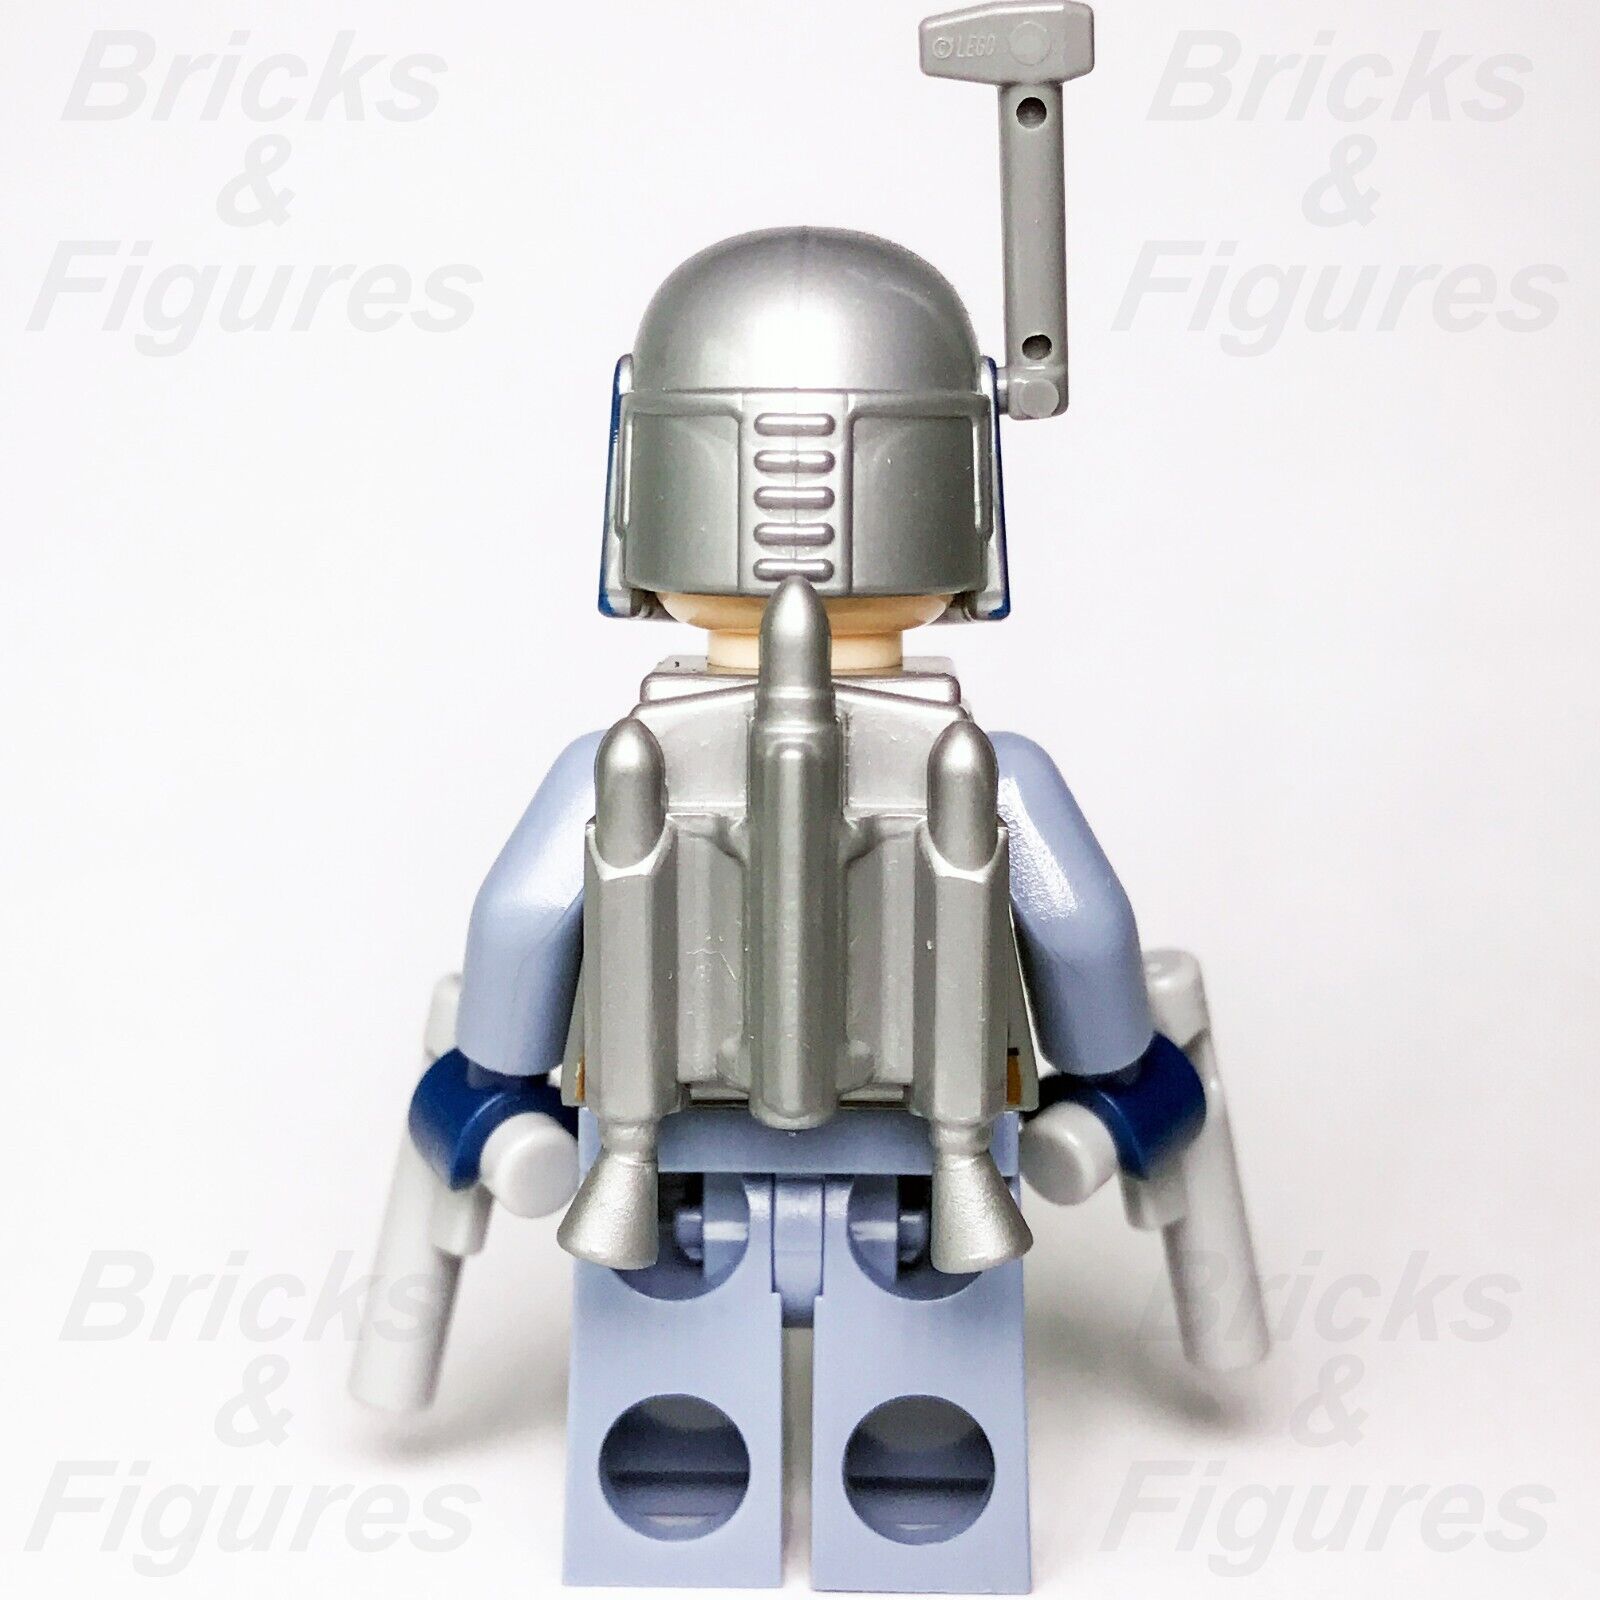 LEGO Star Wars Jango Fett Minifigure Mandalorian Bounty Hunter 75015 sw0468 3